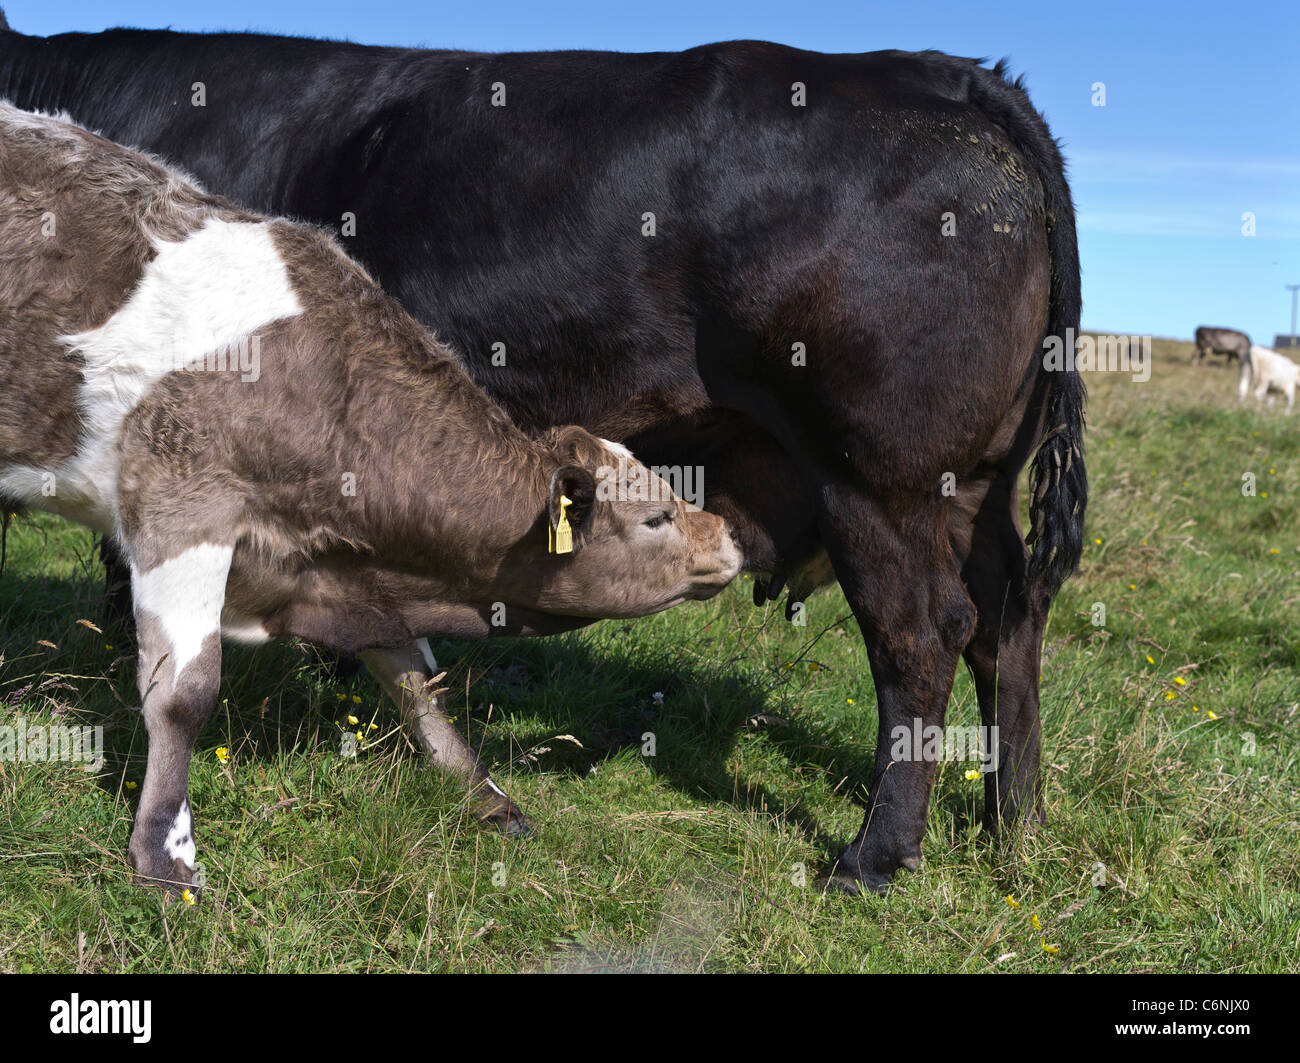 dh Calves COWS UK Calf suckling milk from cow udder suckler feeding Stock Photo